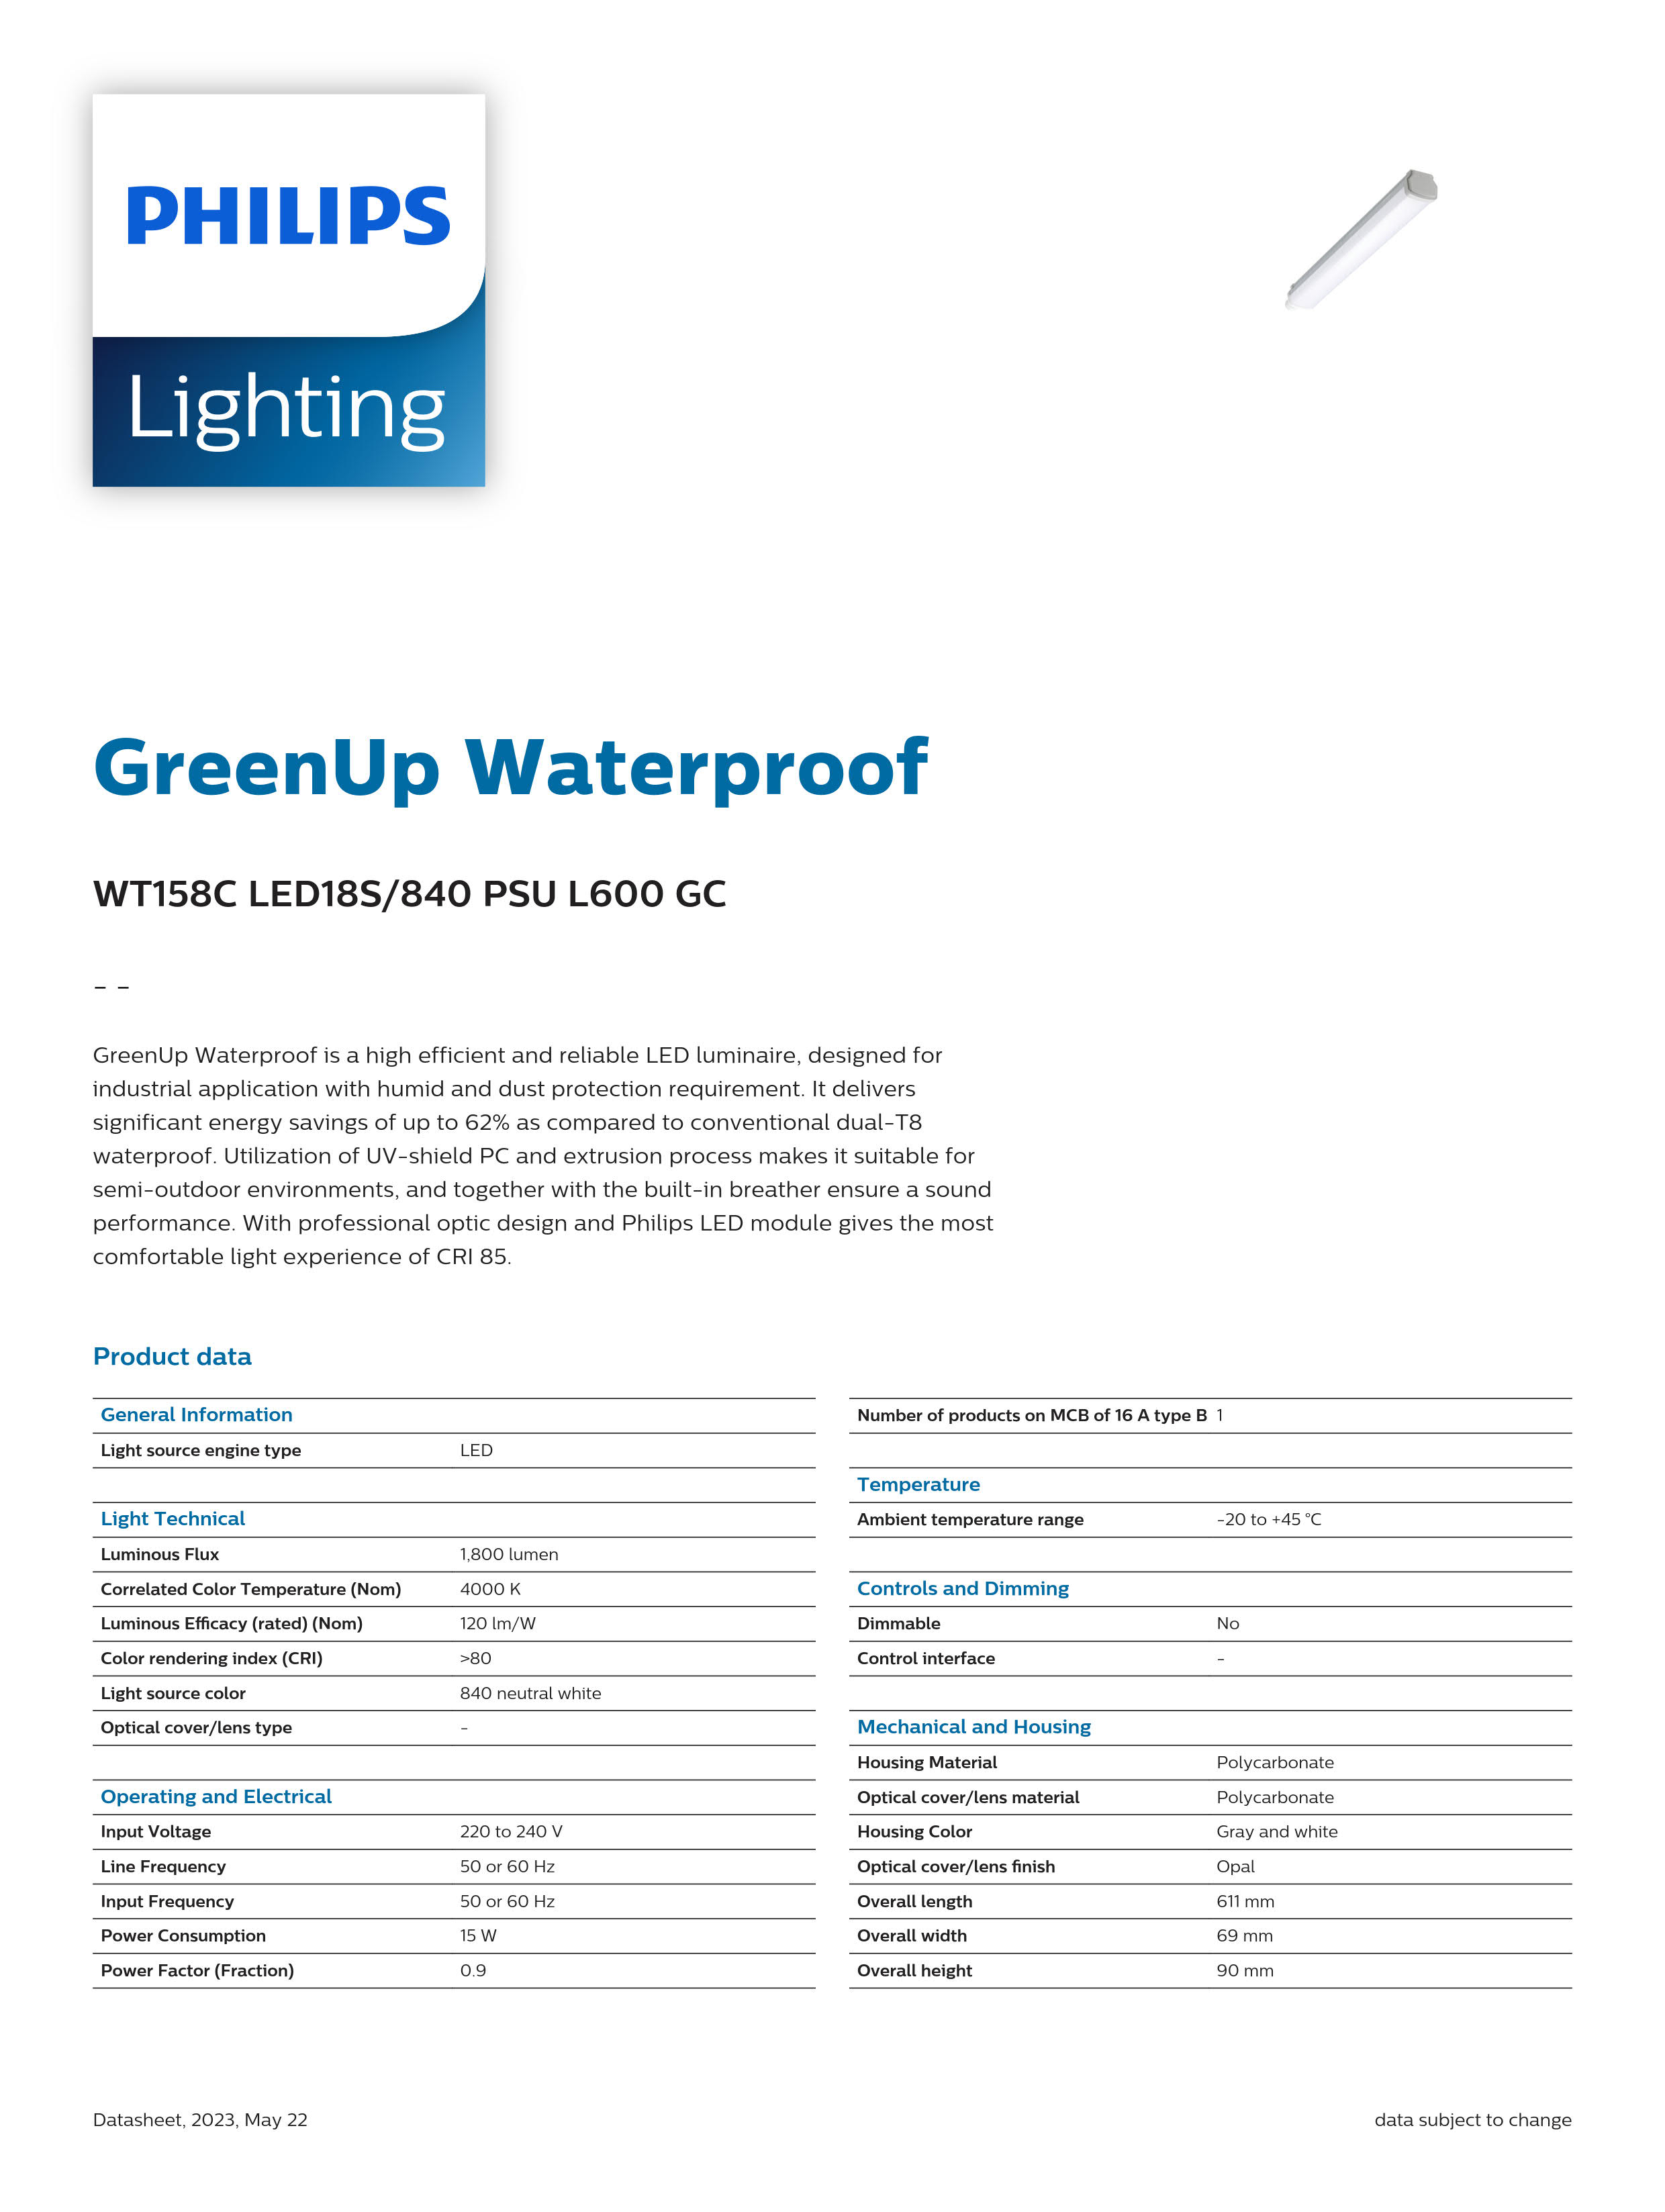 PHILIPS Waterproof WT158C LED18S/840 PSU L600 GC 911401893980